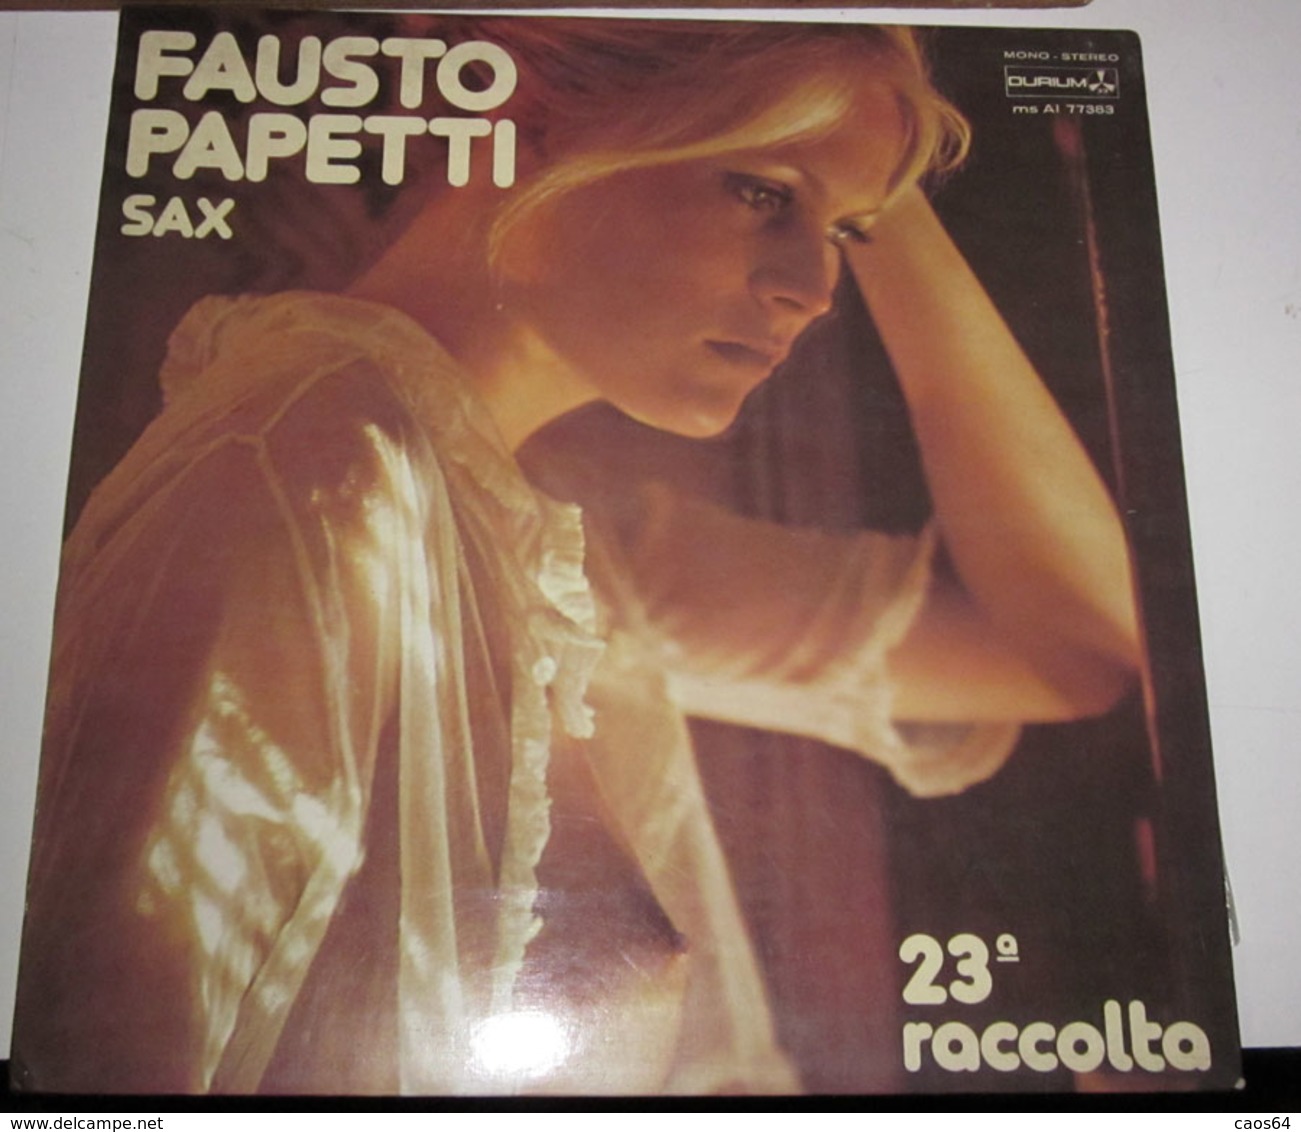 FAUSTO PAPETTI 23a RACCOLTA - Other - Italian Music